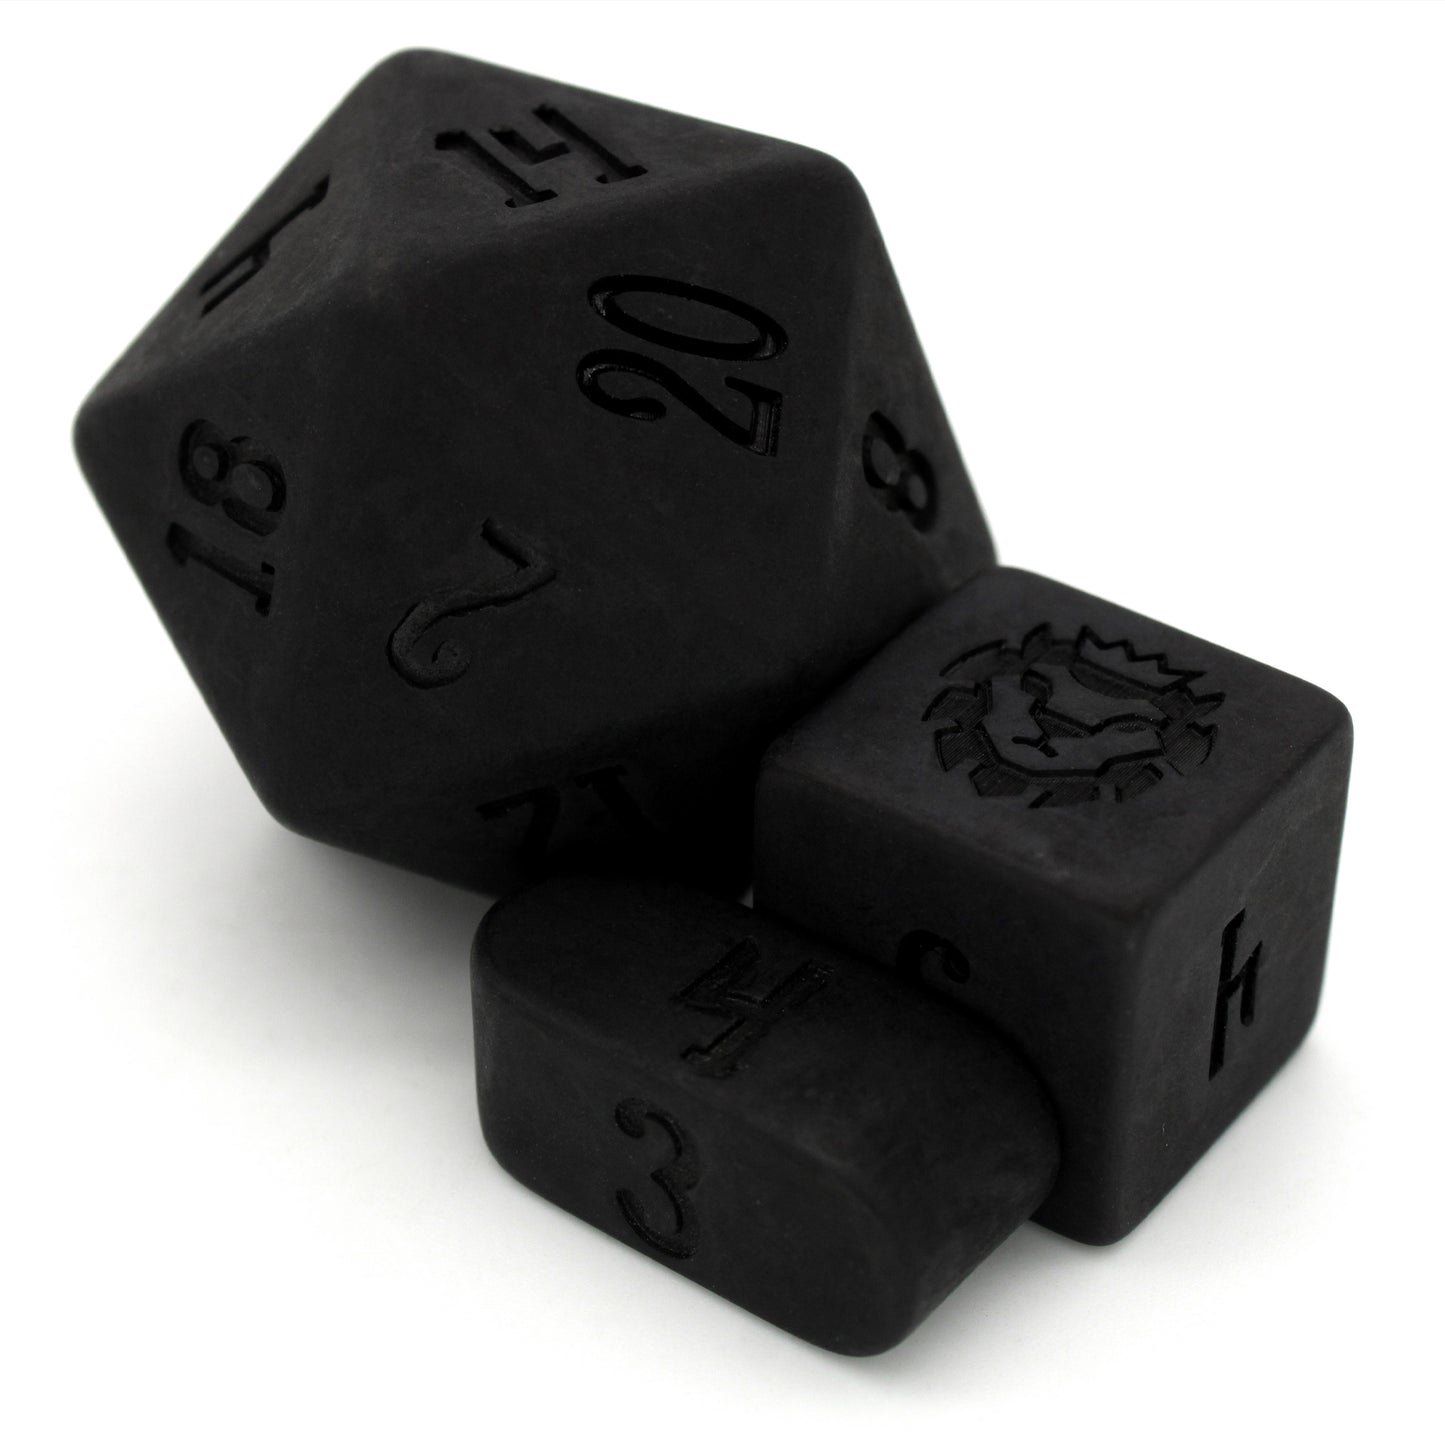 Lump of Coal is a 10-piece set of matte black resin dice.